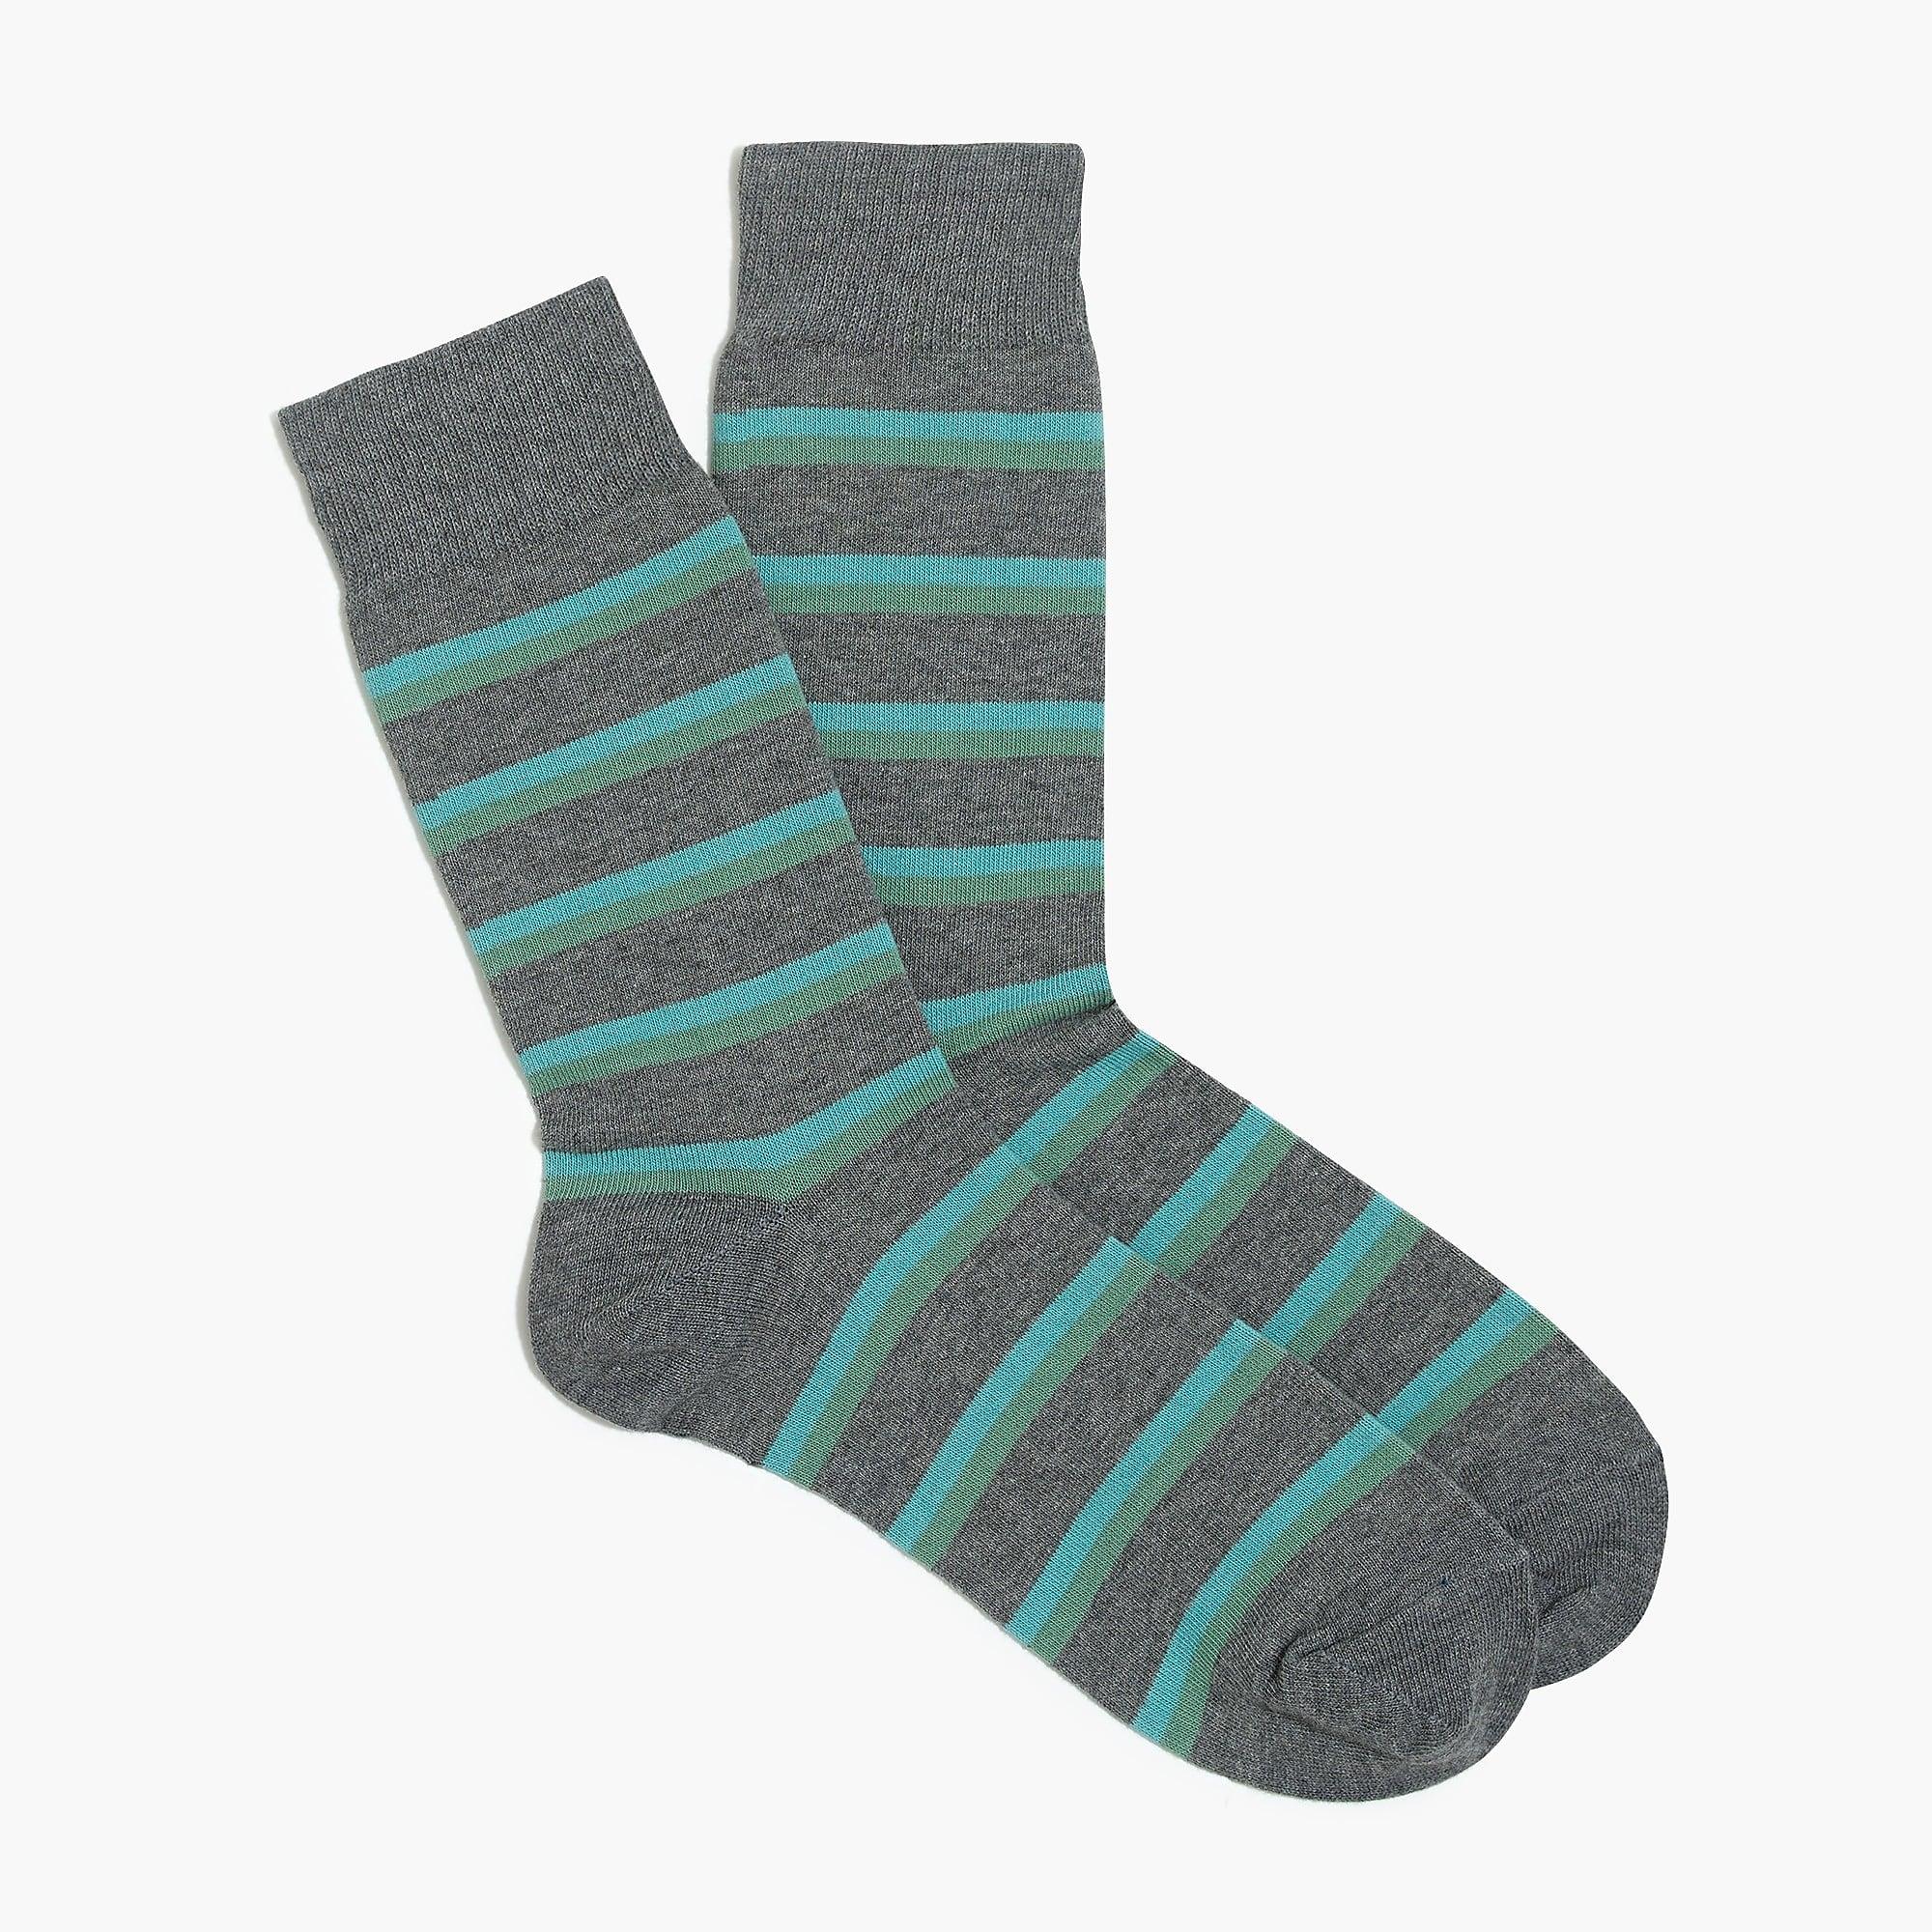 J.Crew Two-tone Striped Socks for Men - Lyst